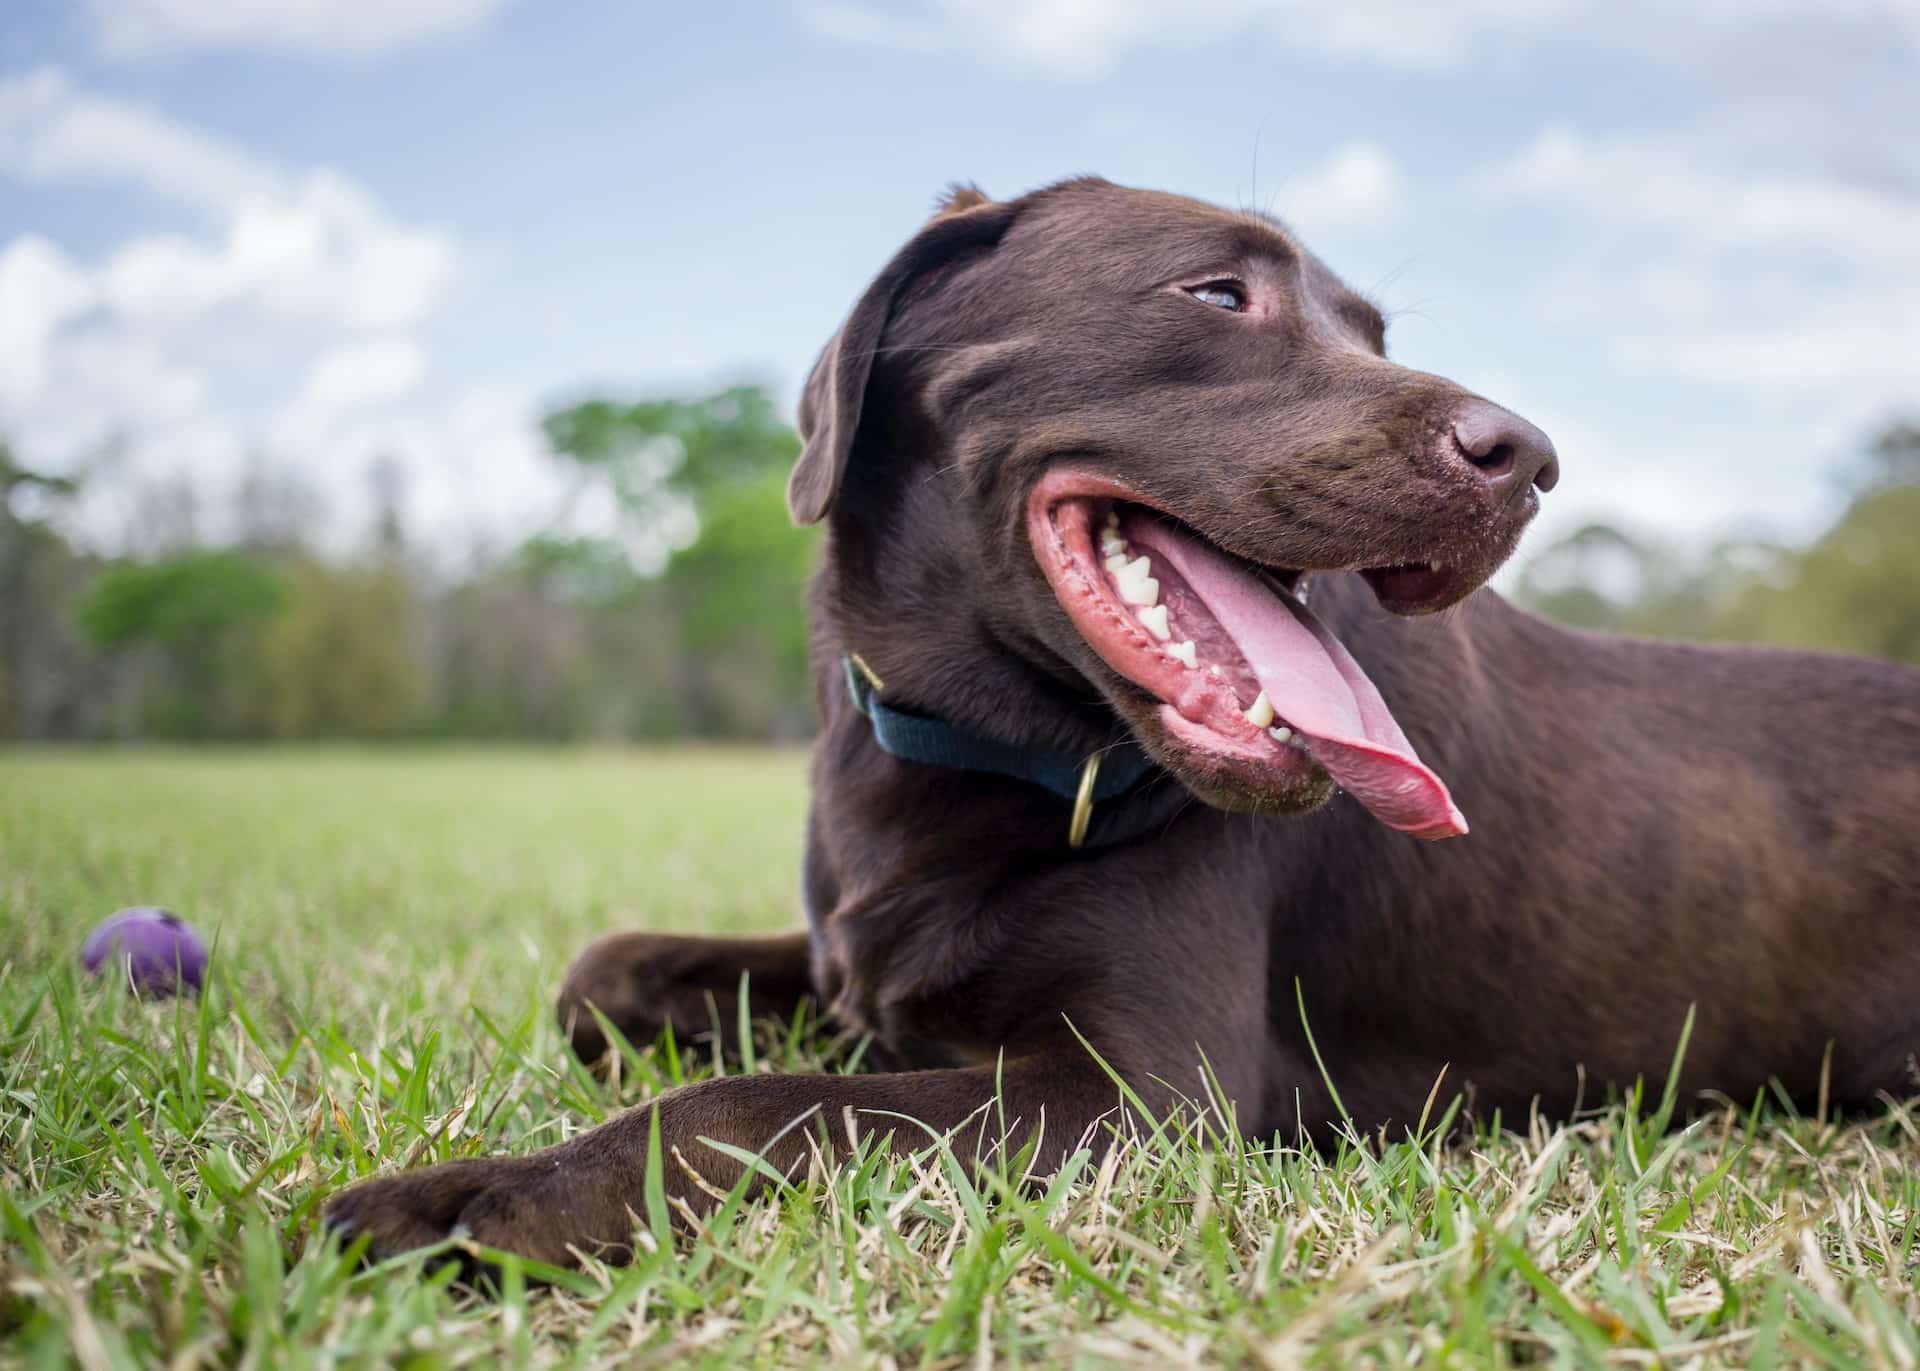 A chocolate brown Labrador Retriever resting on the grass in a park